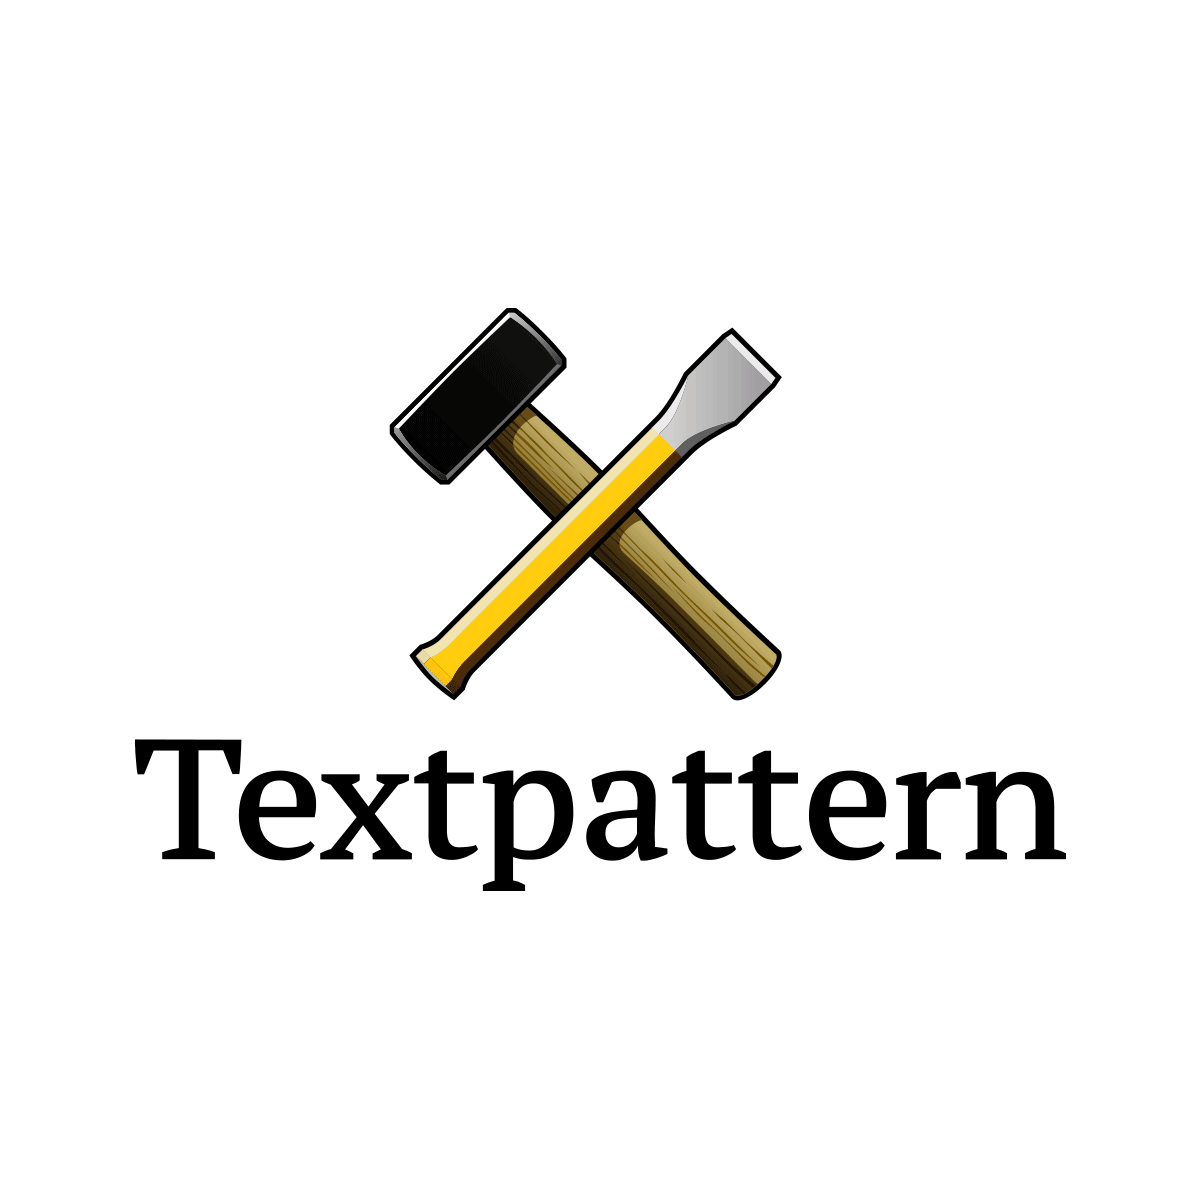 forum.textpattern.com